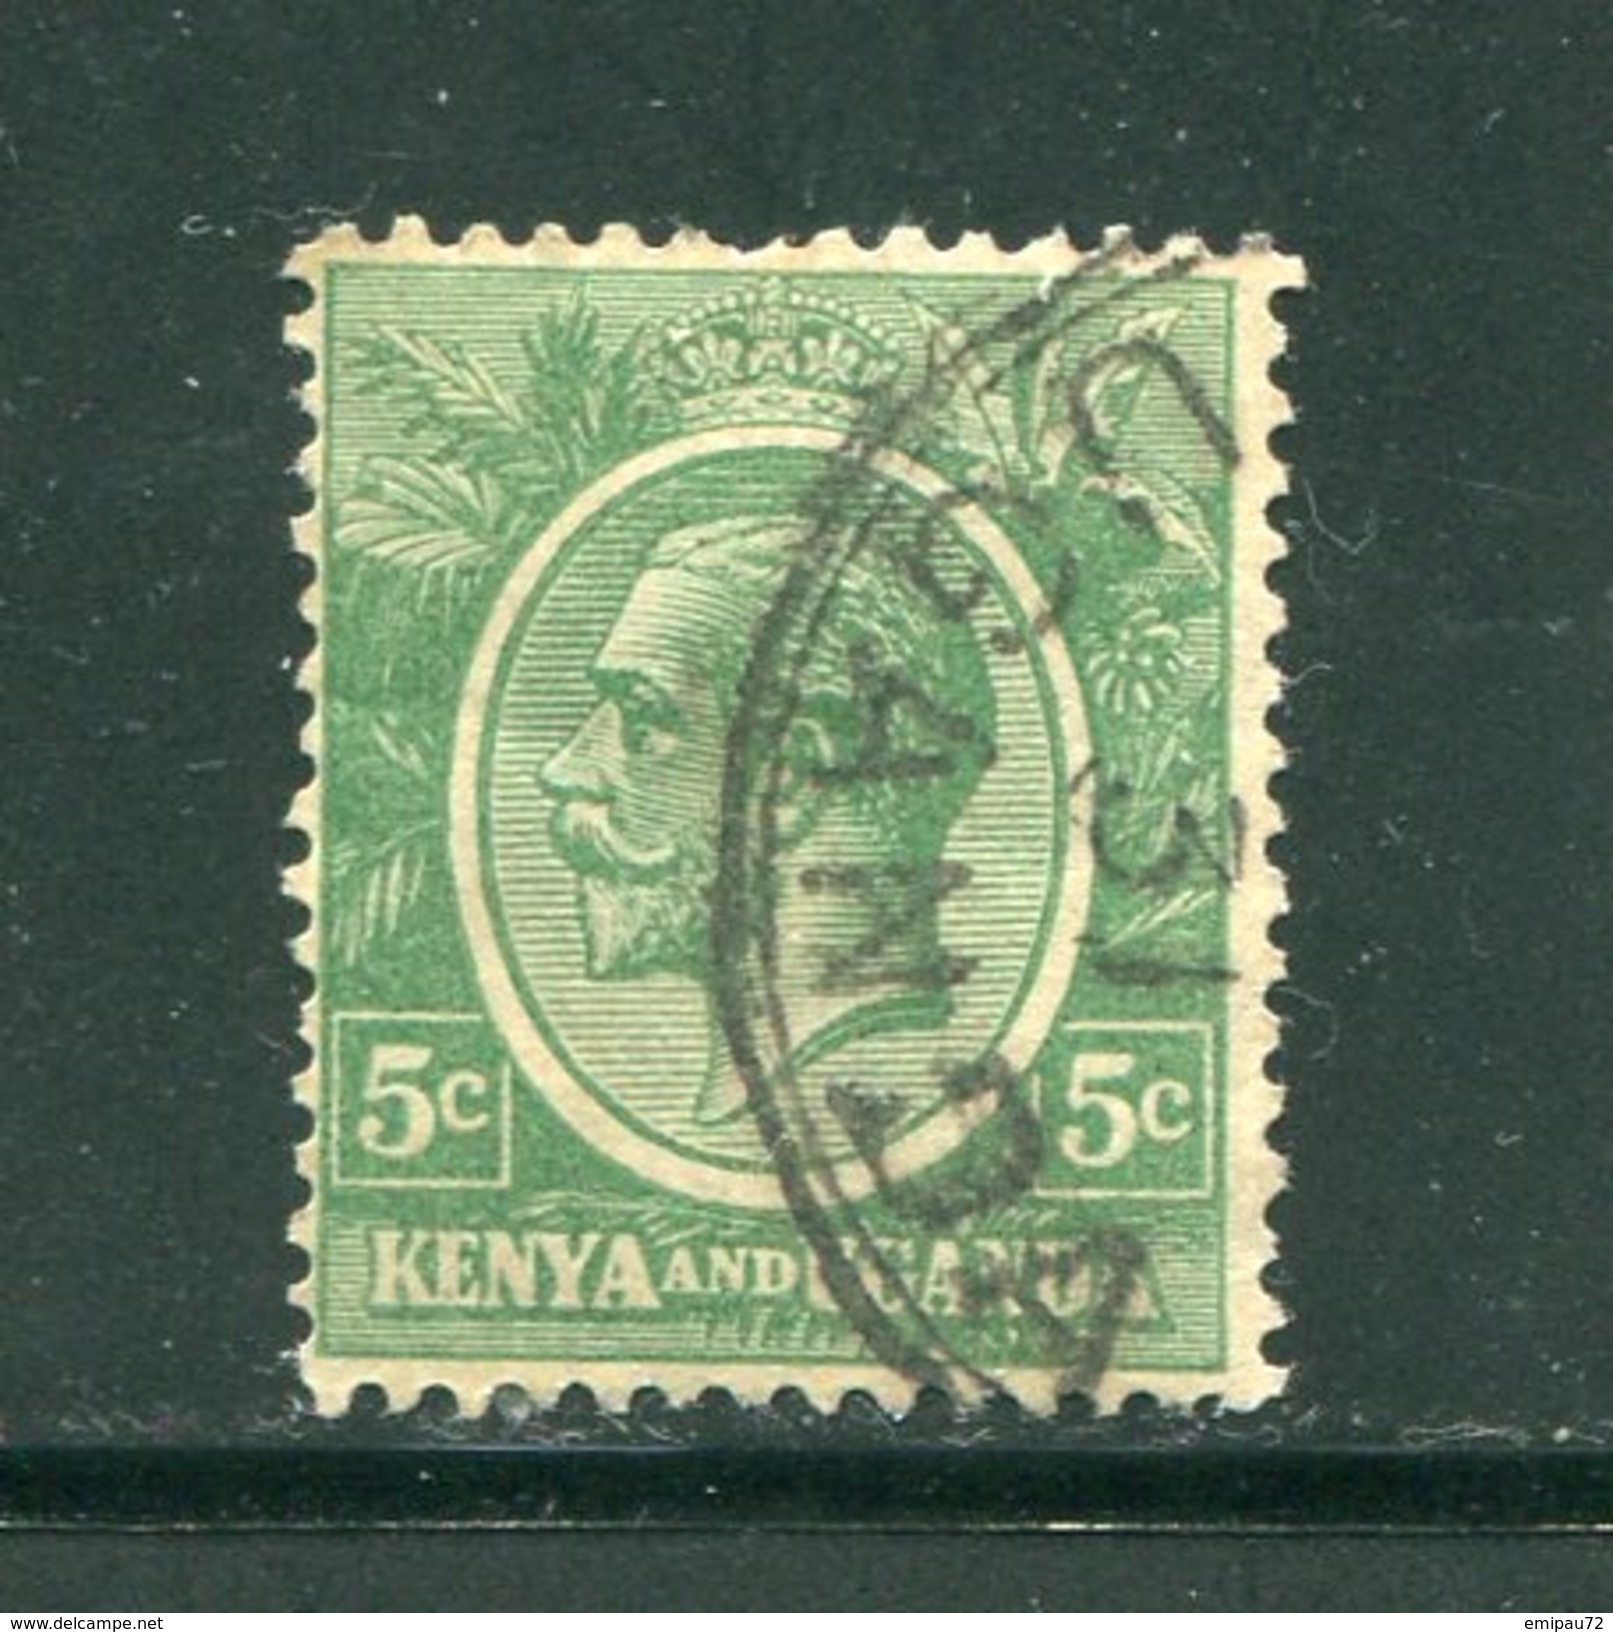 KENYA Et OUGANDA- Y&T N°2A- Oblitéré - Kenya & Ouganda